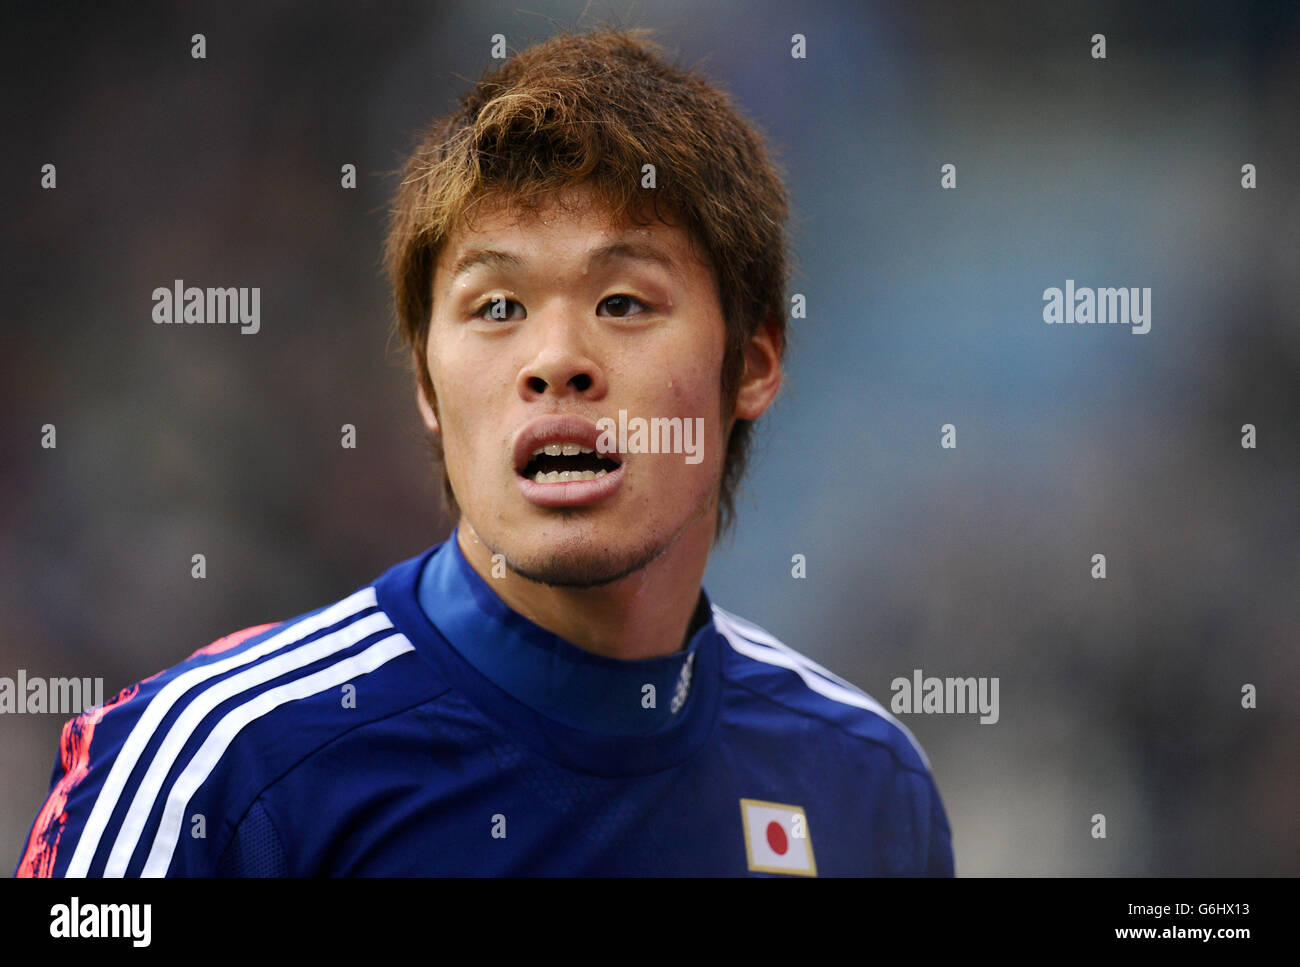 Soccer - International Friendly - Japan v Netherlands - Cristal Arena. Hiroki Sakai, Japan. Stock Photo